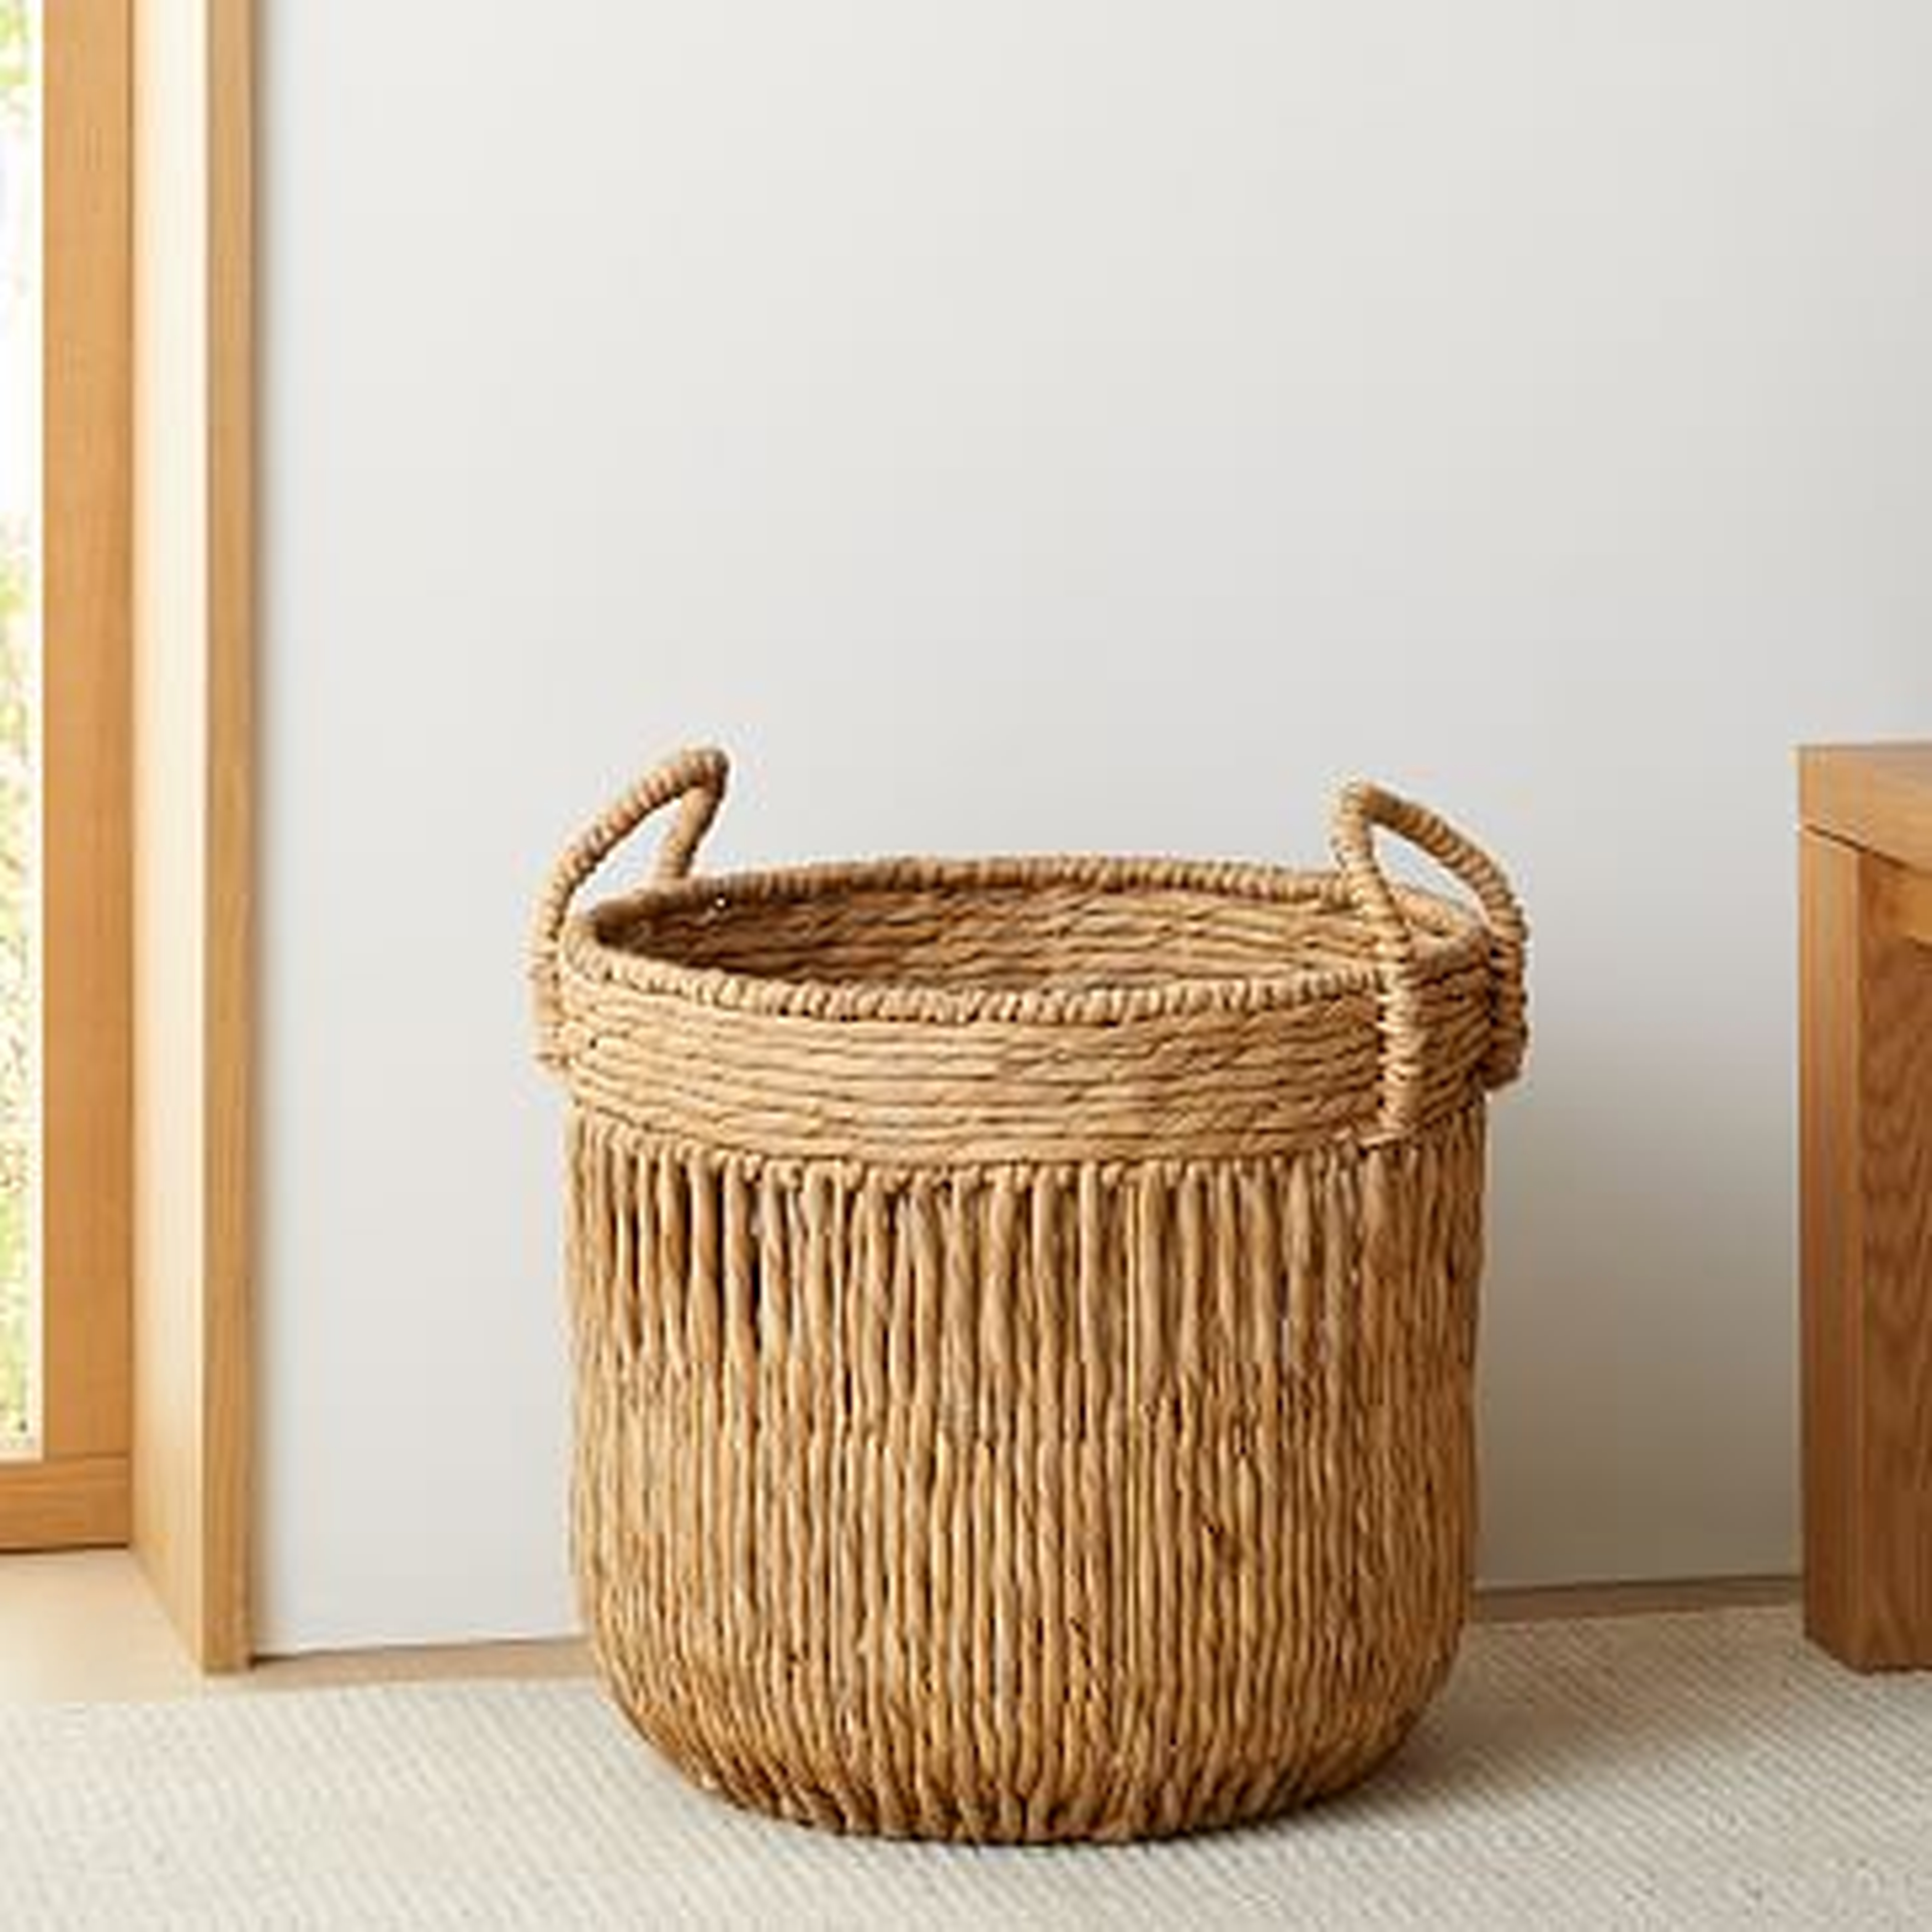 Vertical Lines Baskets, Large Round, Natural - West Elm